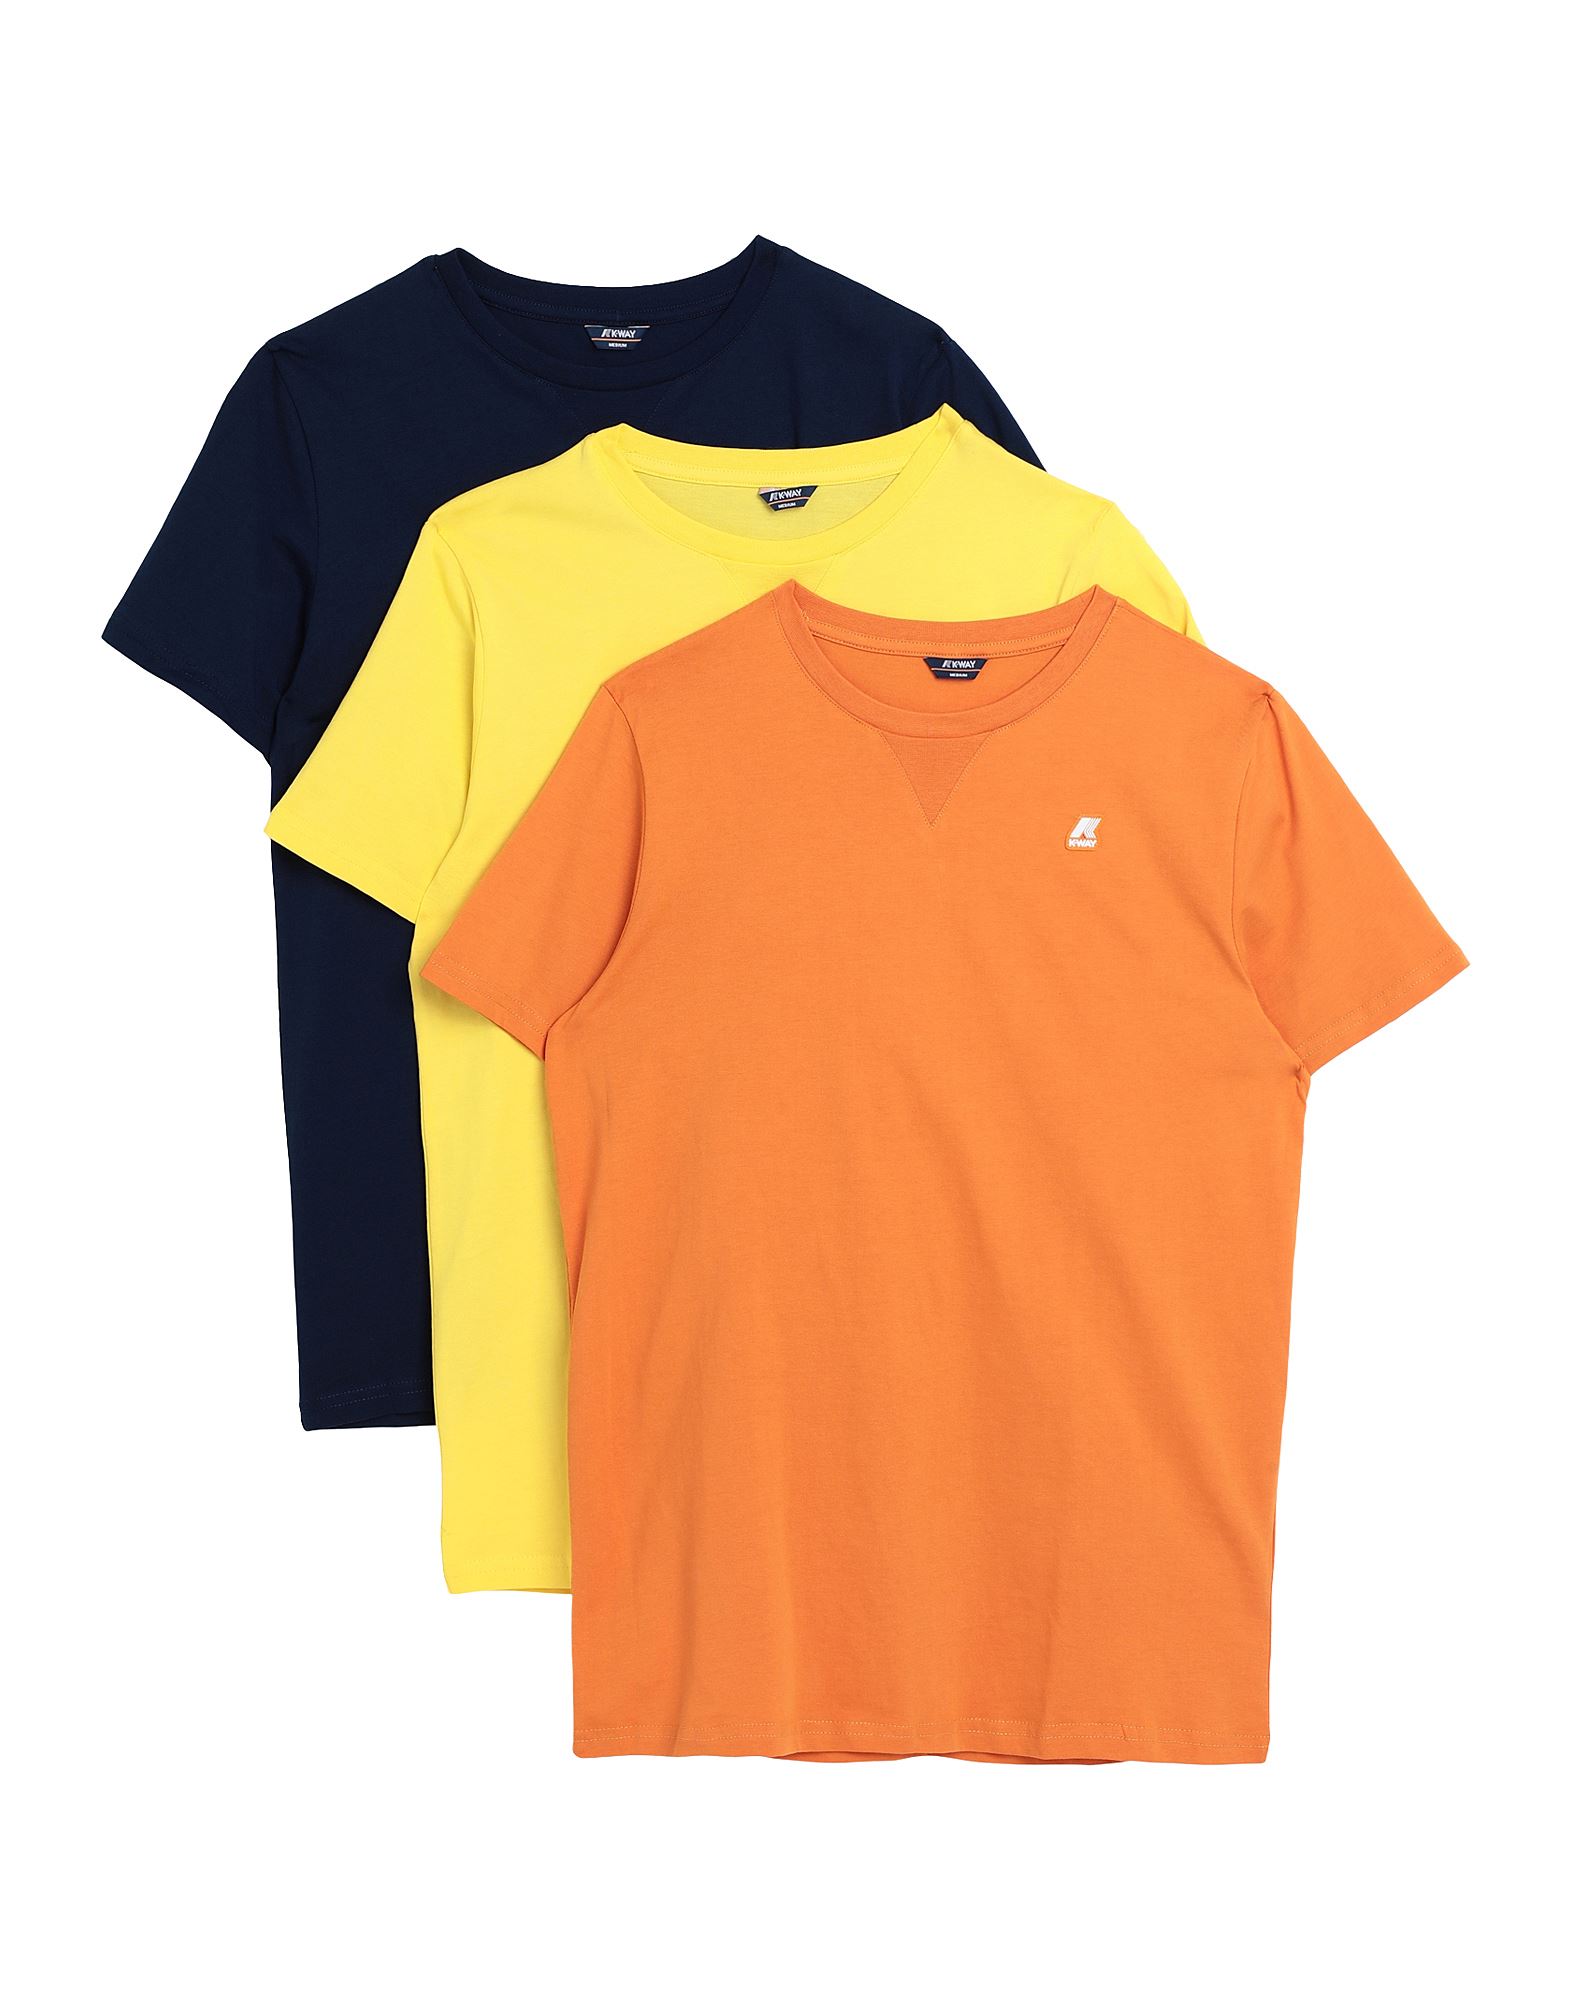 K-way T-shirts In Orange